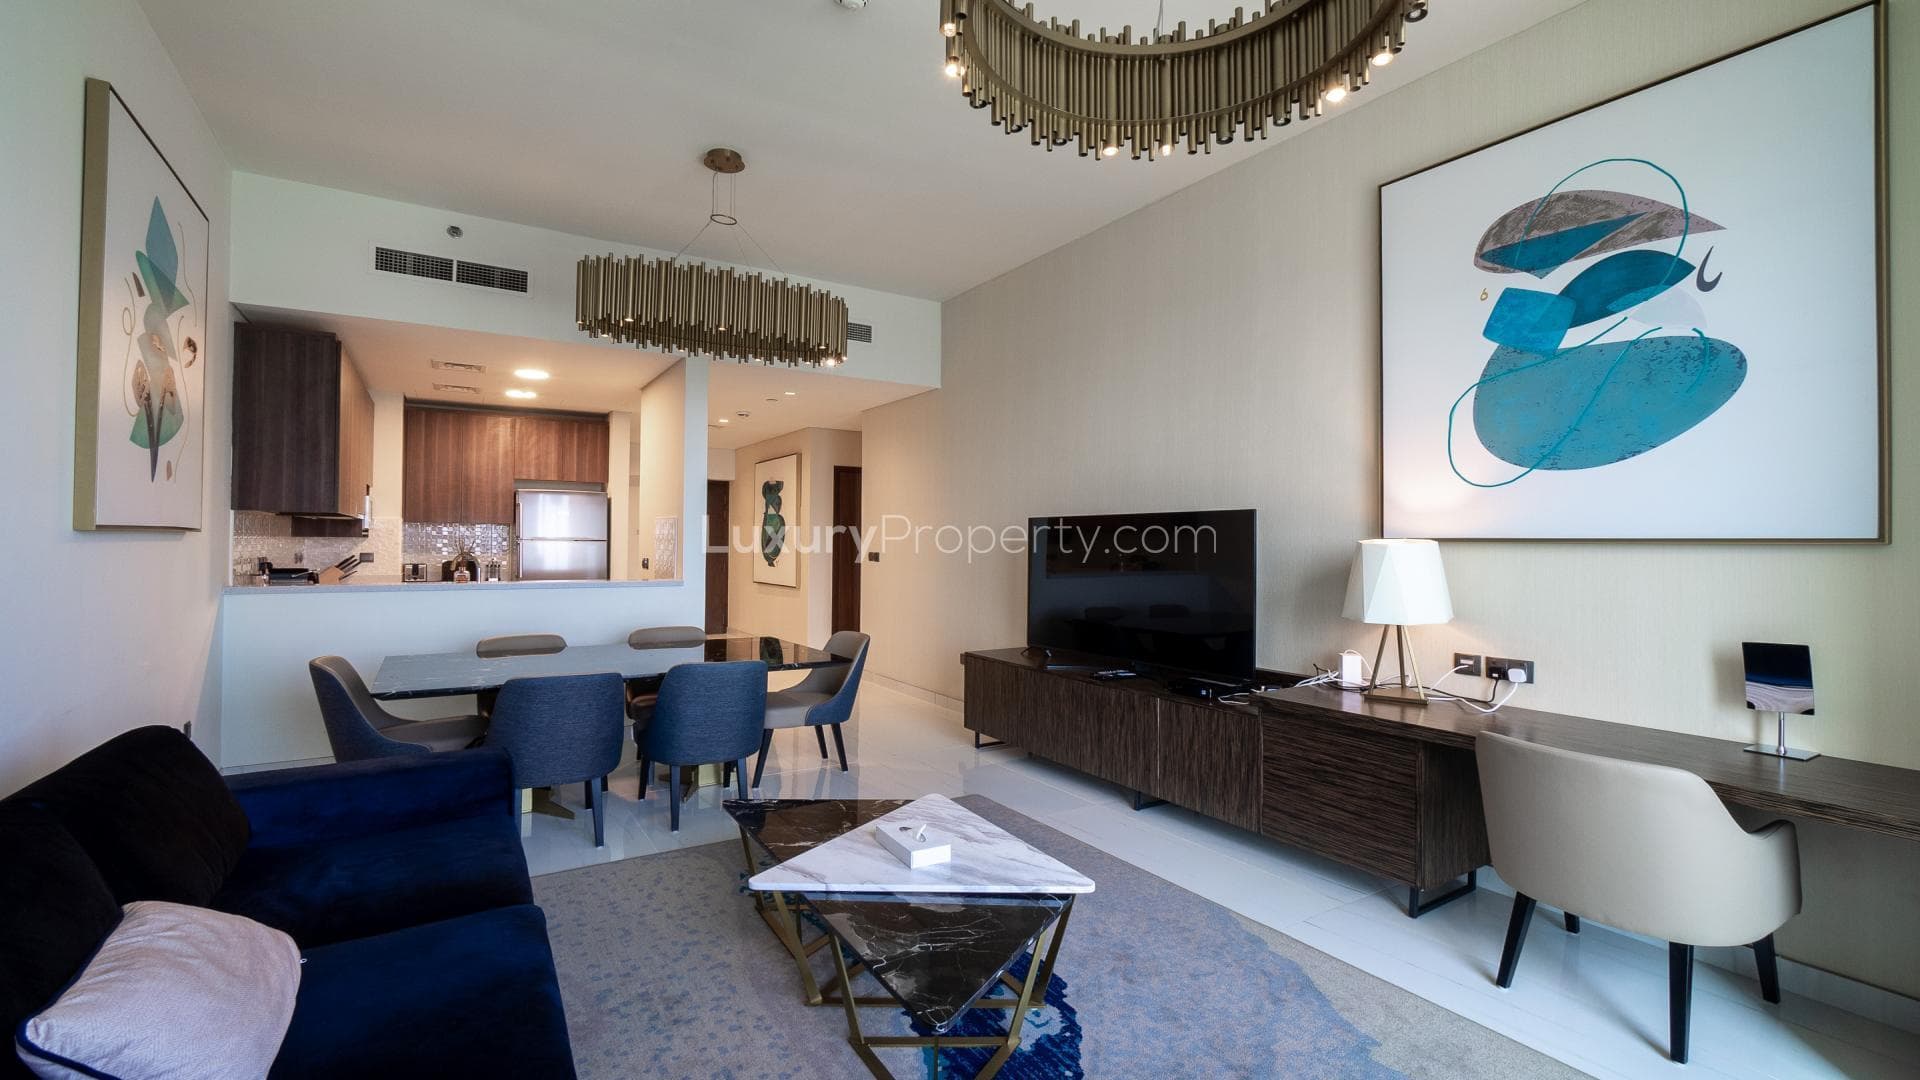 2 Bedroom Apartment For Rent Avani Palm View Hotel Suites Lp36171 16647eff265d3200.jpg